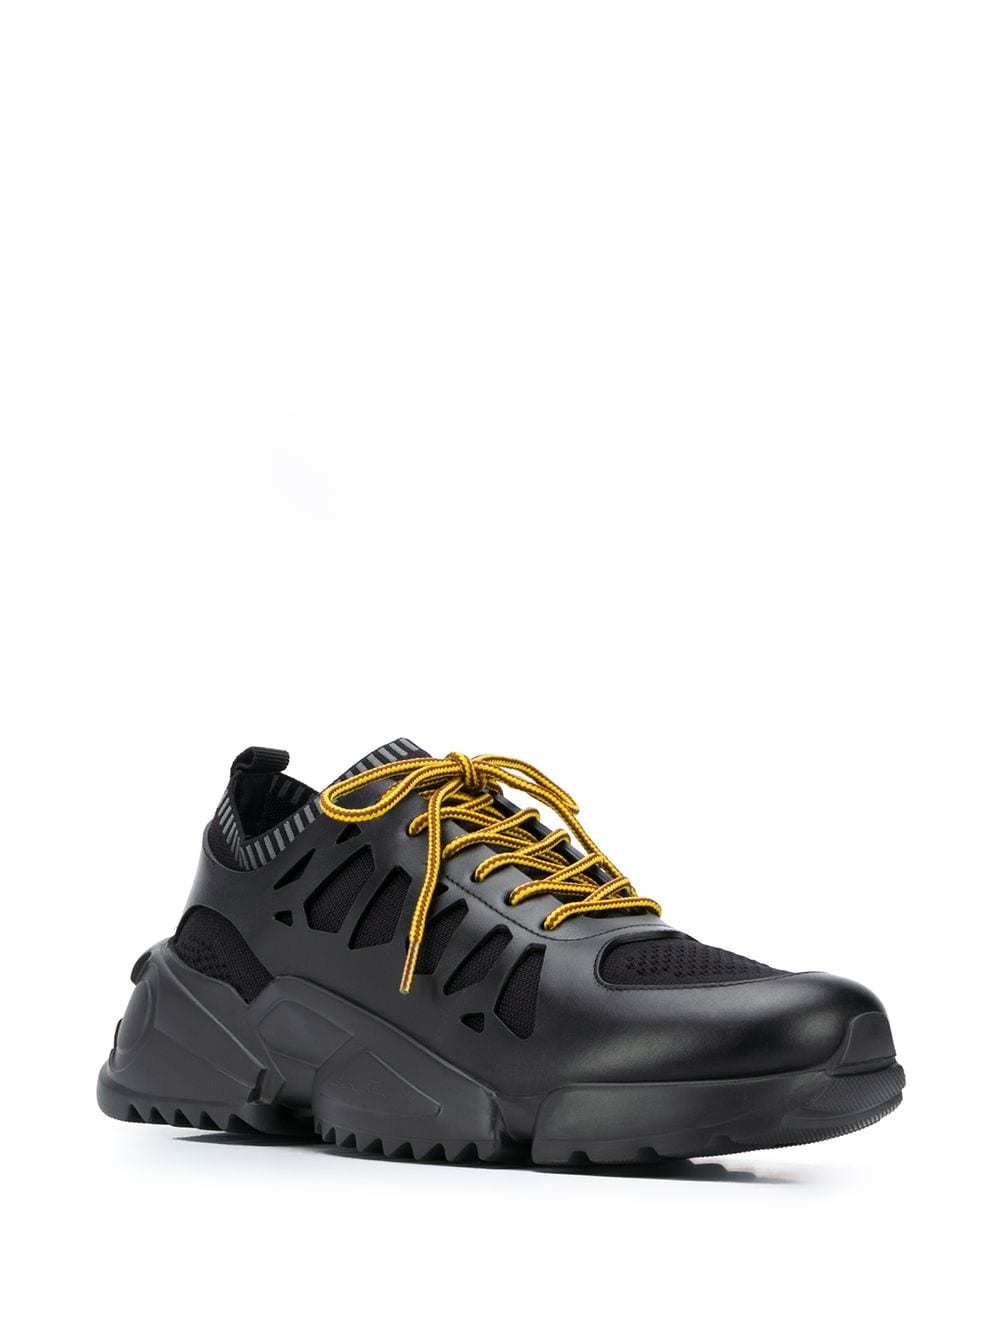 Salvatore Ferragamo Sock Style Low Top Sneakers, $488 | farfetch.com ...